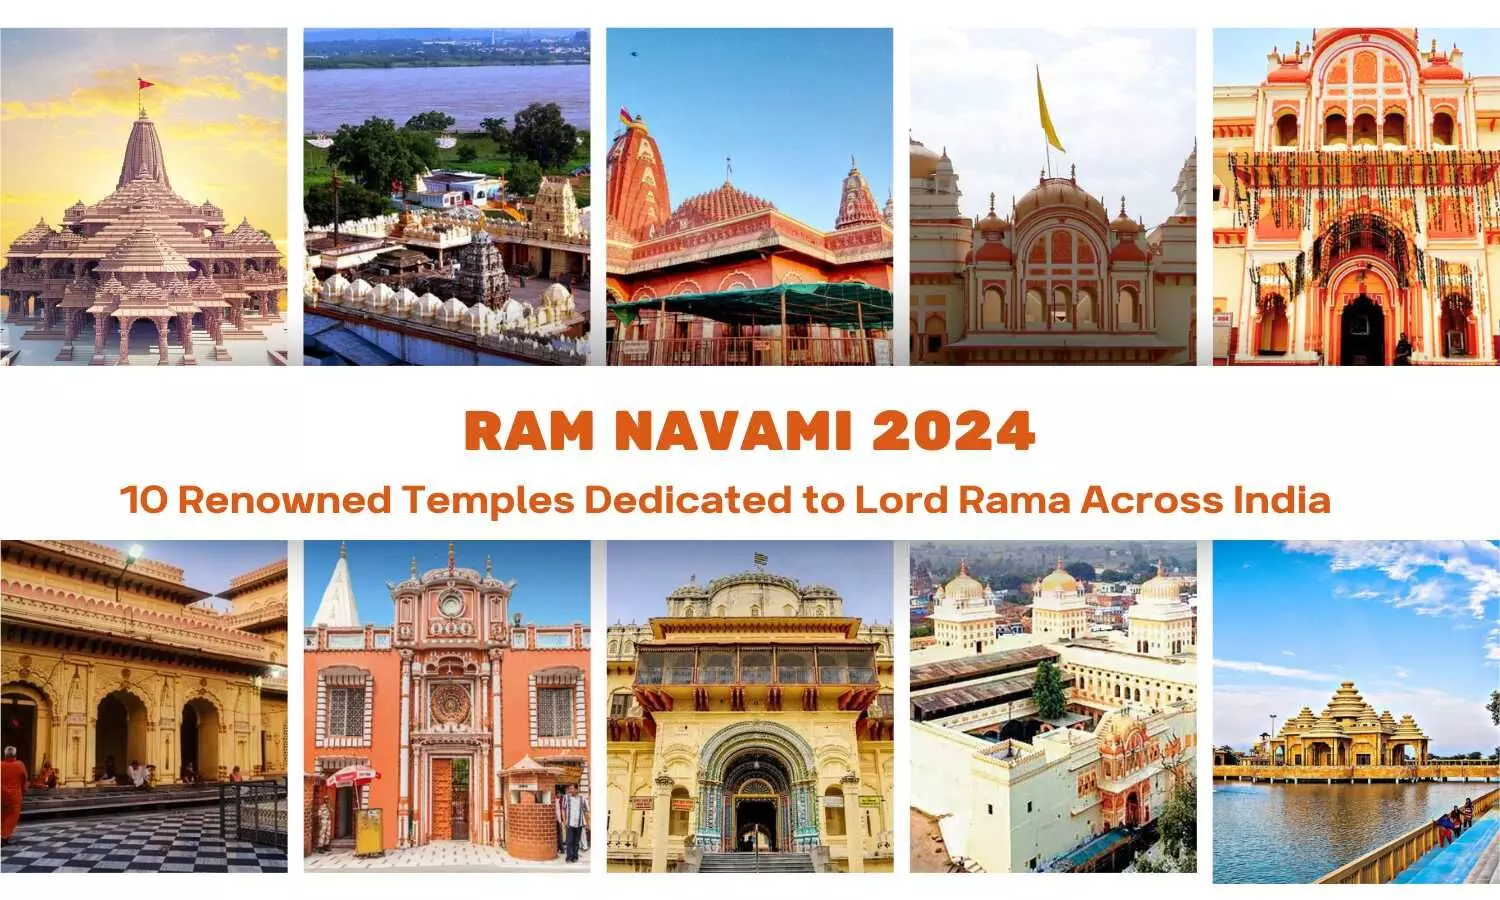 Ram Navami 2024: 10 Renowned Temples Dedicated to Lord Rama Across India